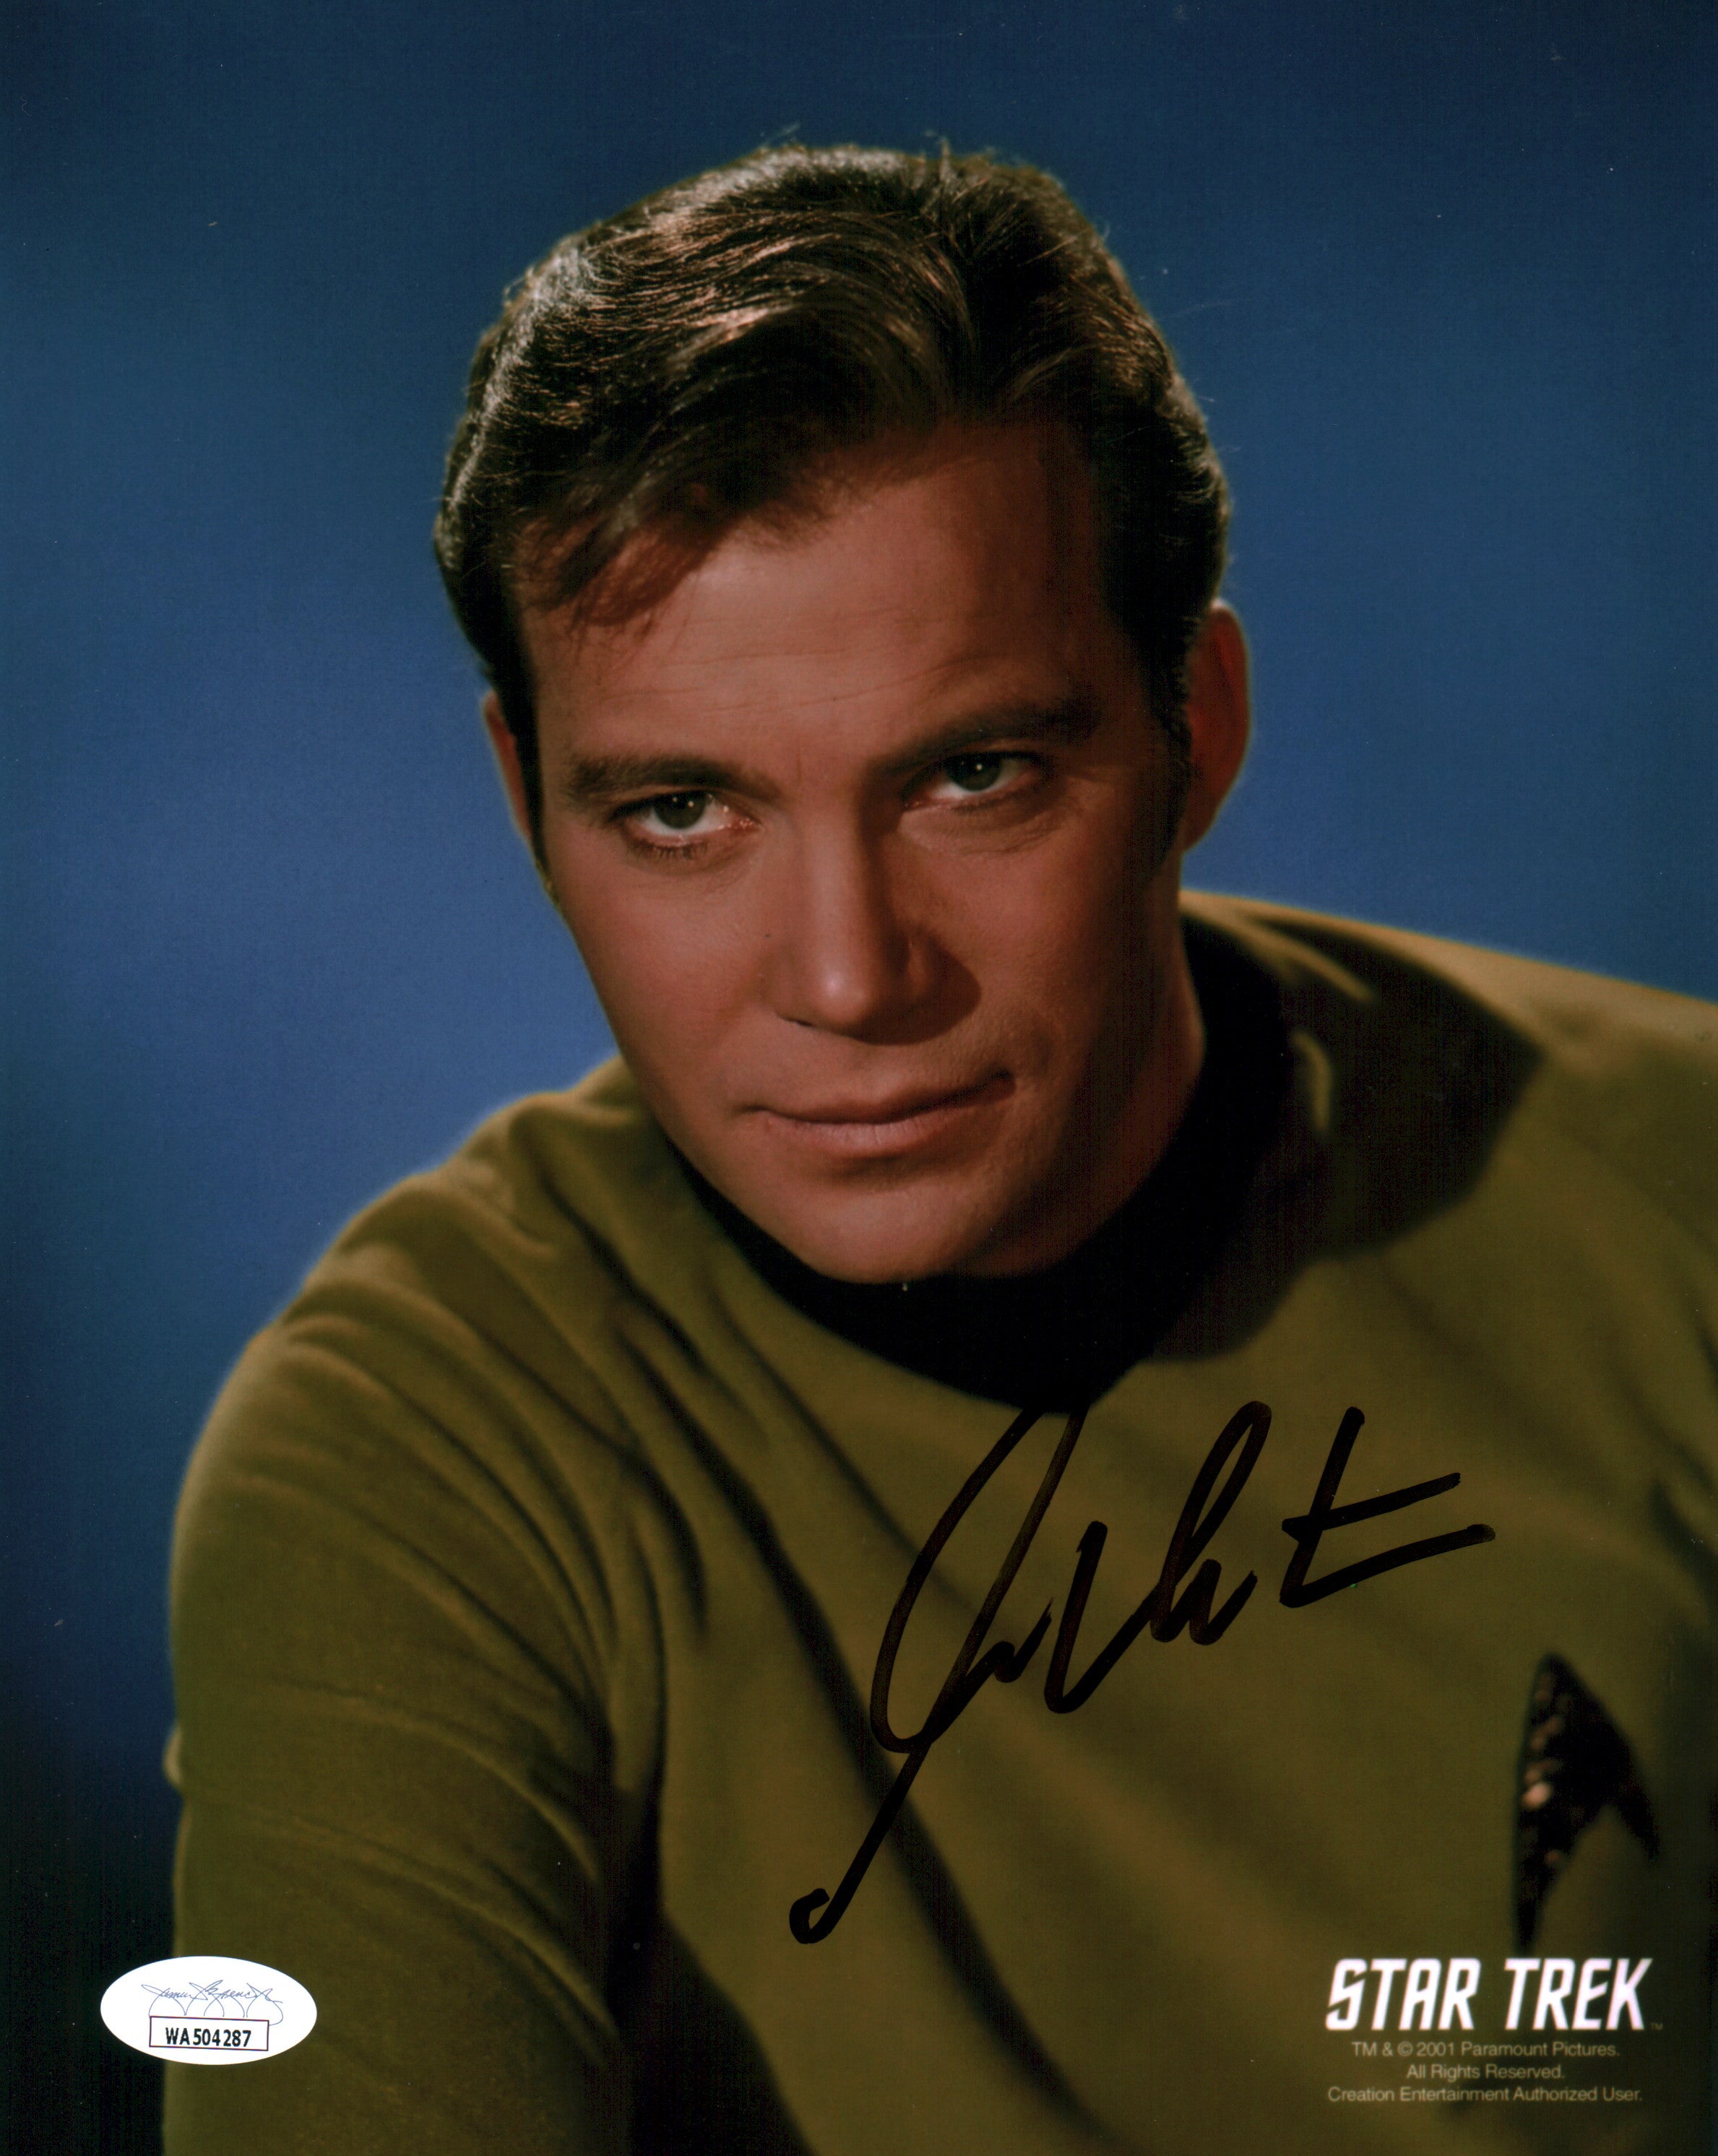 William Shatner Star Trek 8x10 Signed Photo JSA Certified Autograph